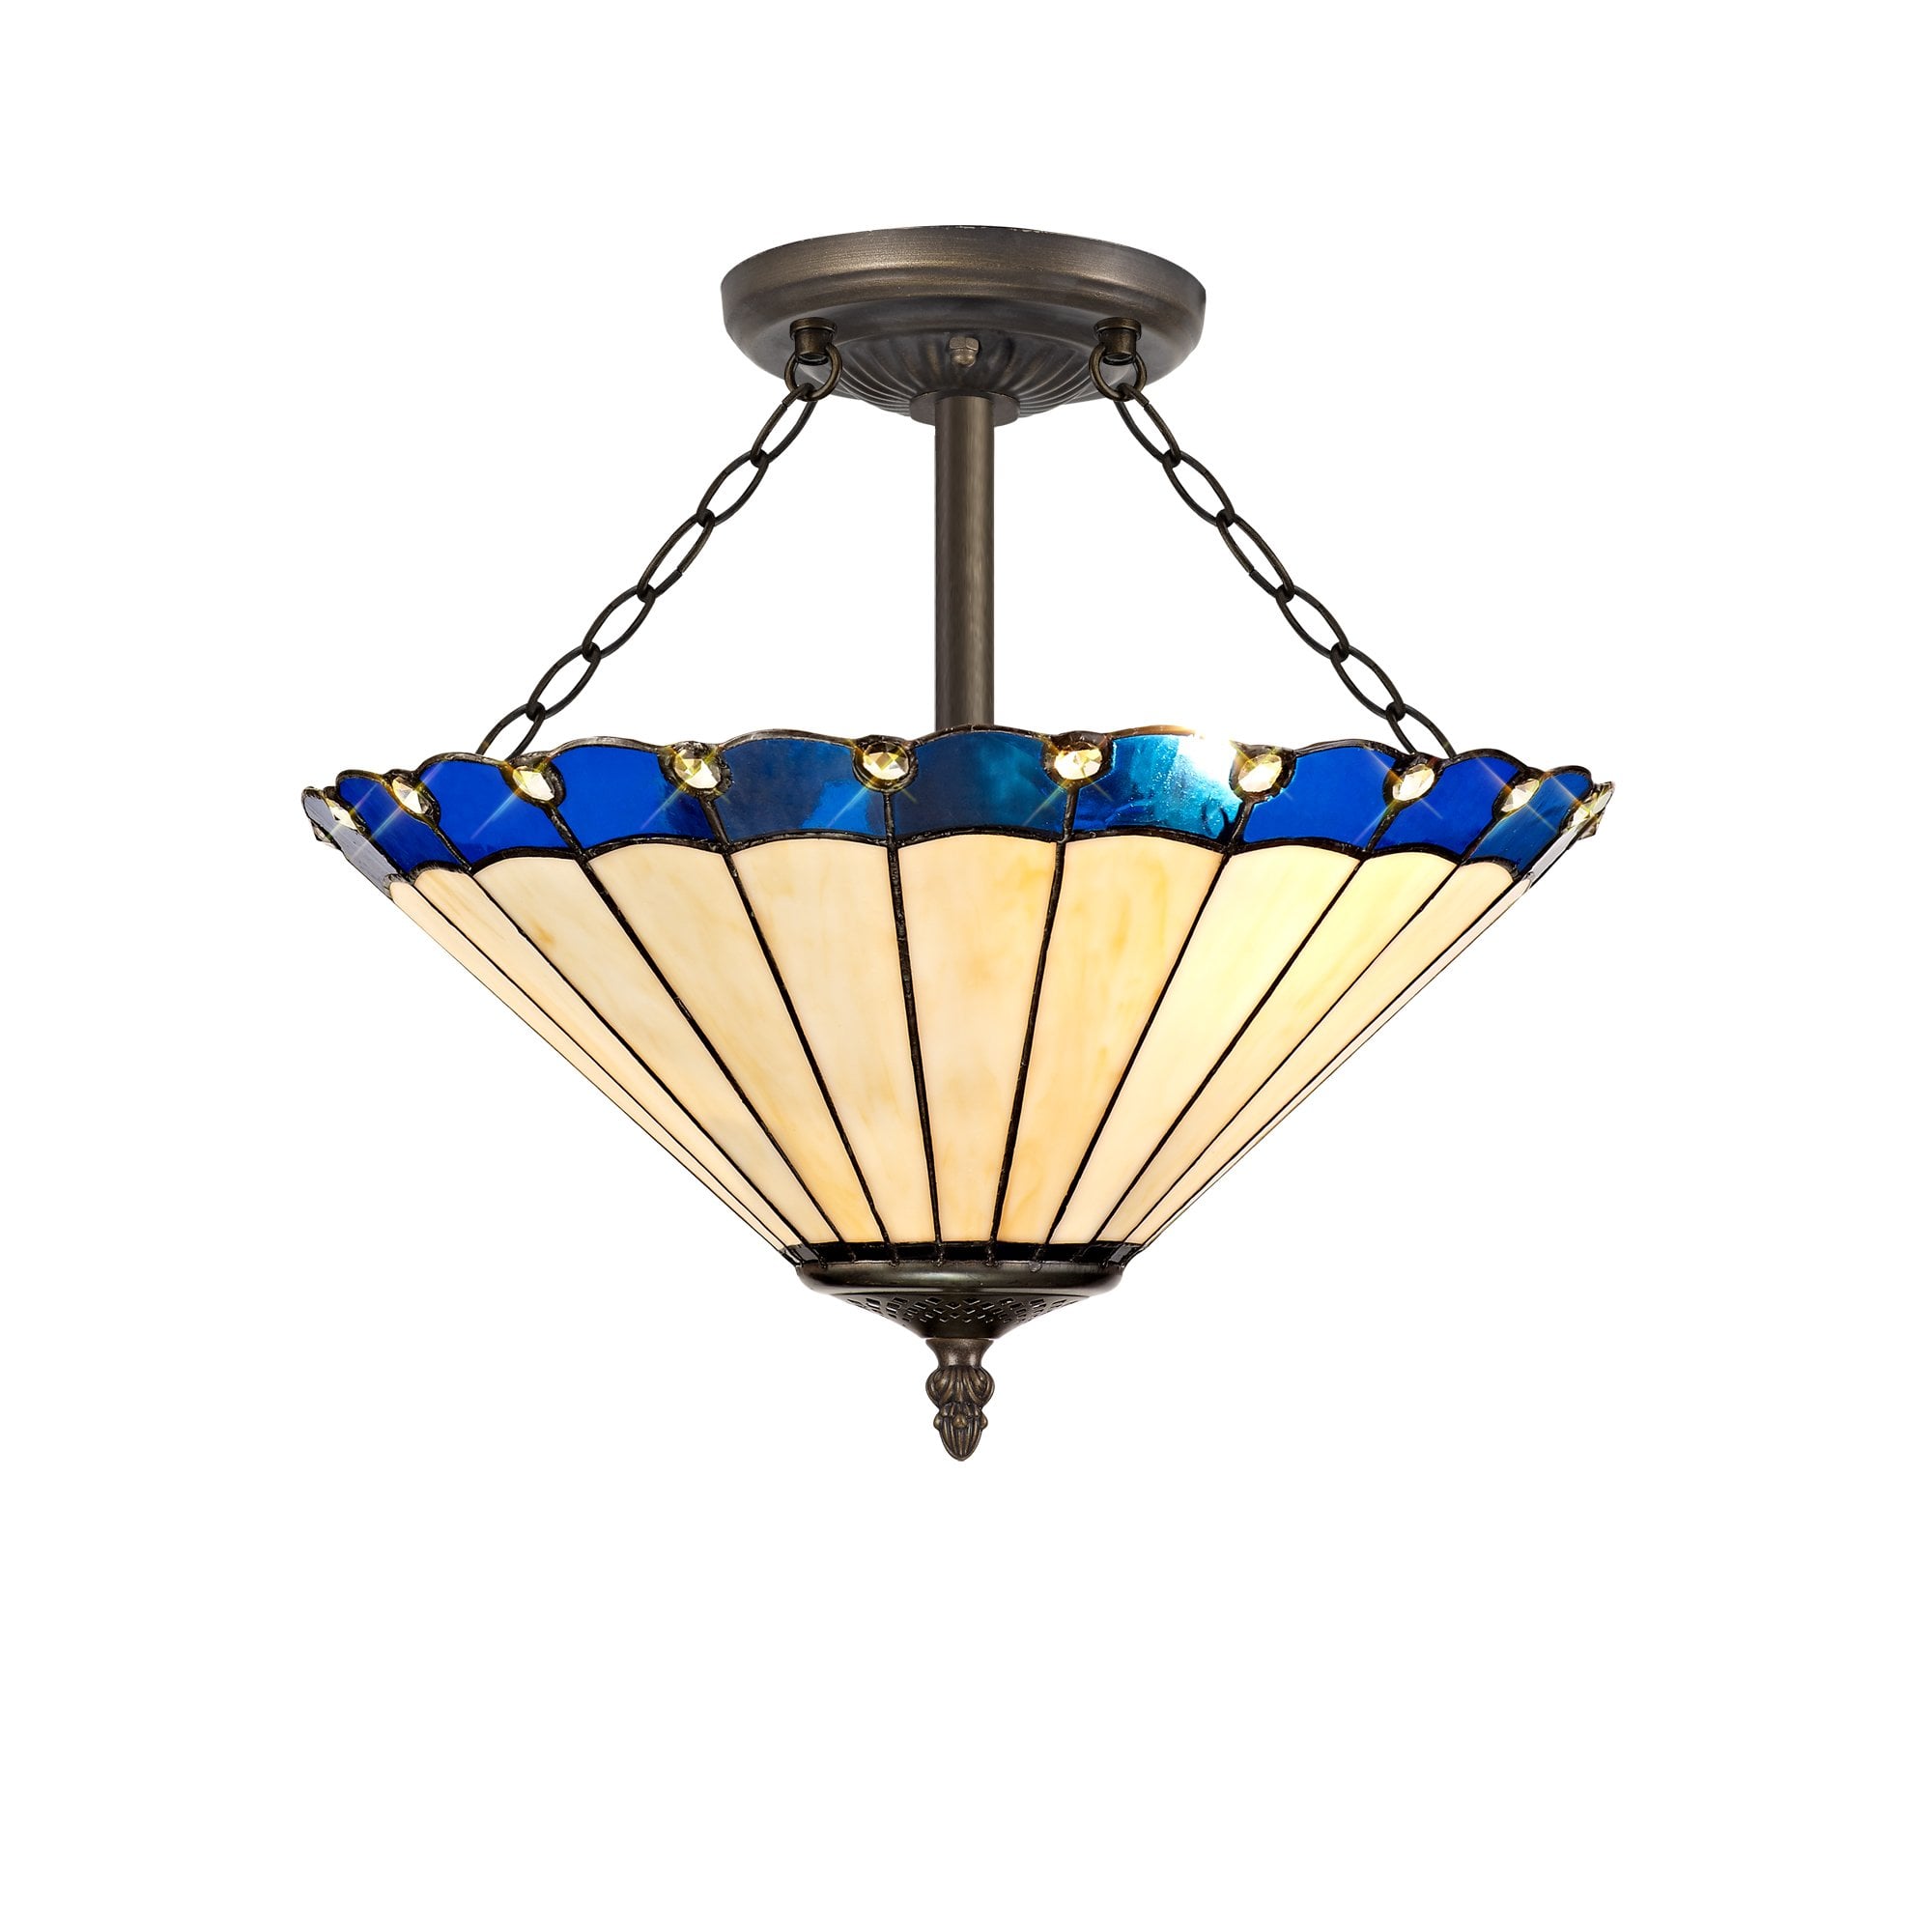 3 Light Semi Ceiling E27 With 40cm Tiffany Shade, Blue/Cream/Crystal/Aged Antique Brass